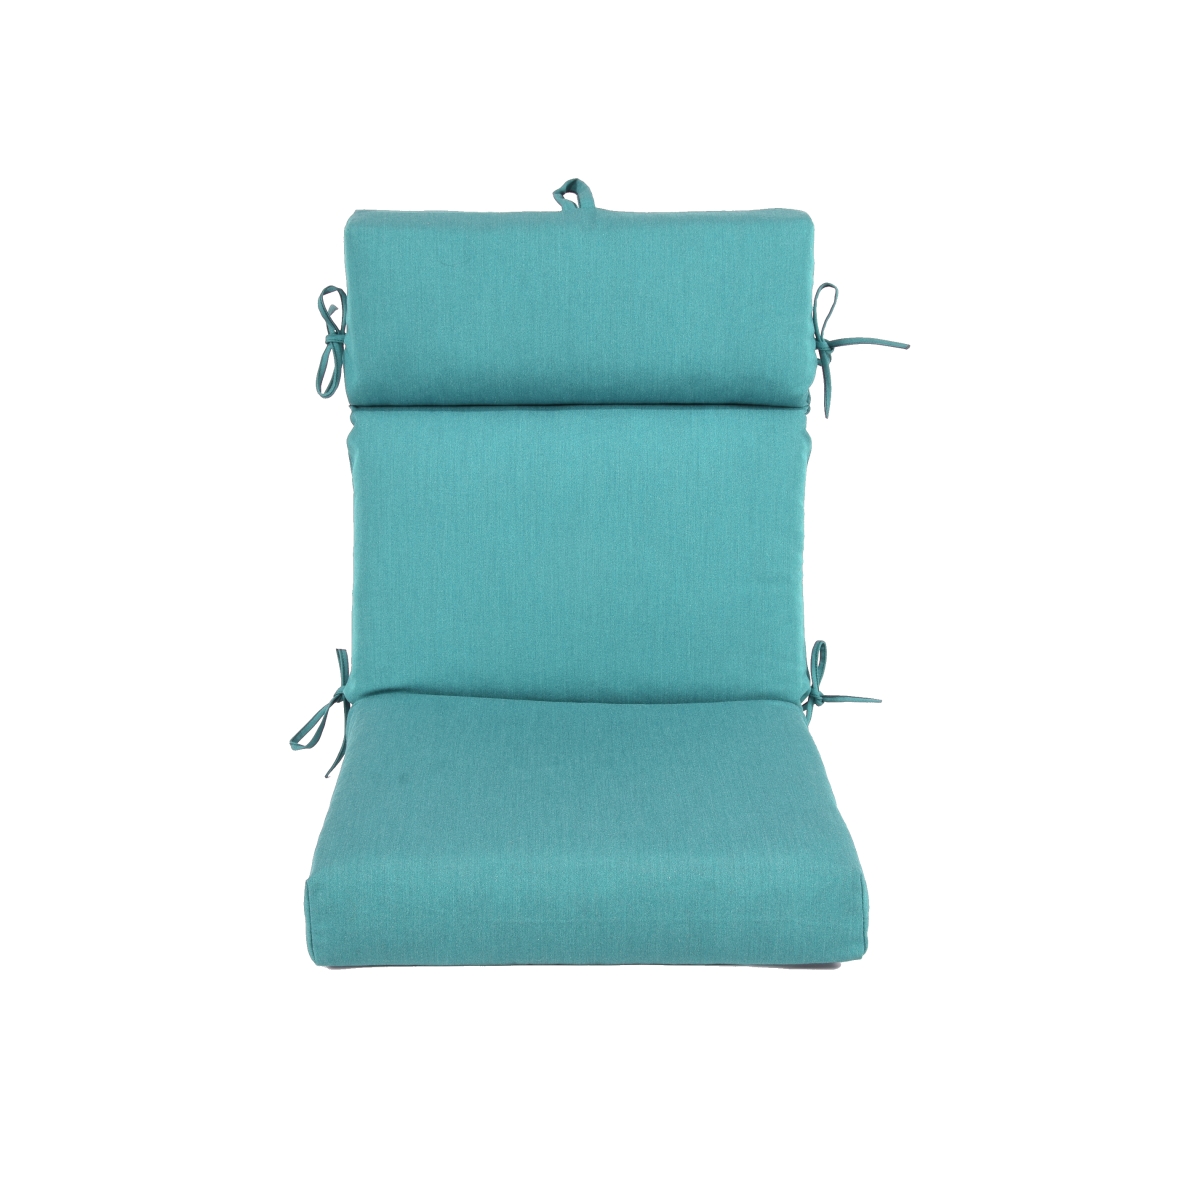 Cudc44-sda16 44 X 21 In. Pacifica Premium Patio Dining Chair Cushion In Surf